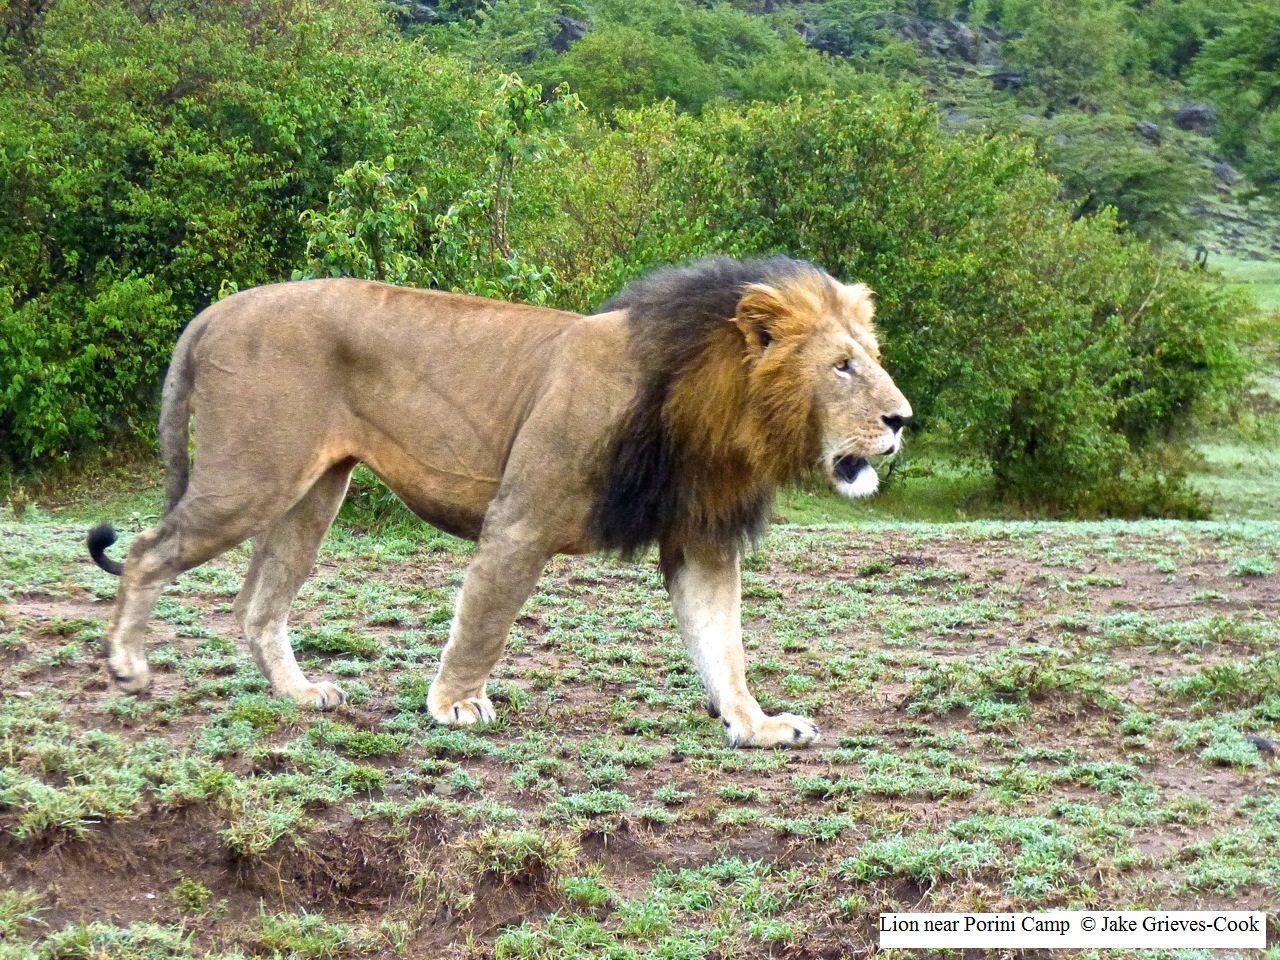 Lion near Porini Camp